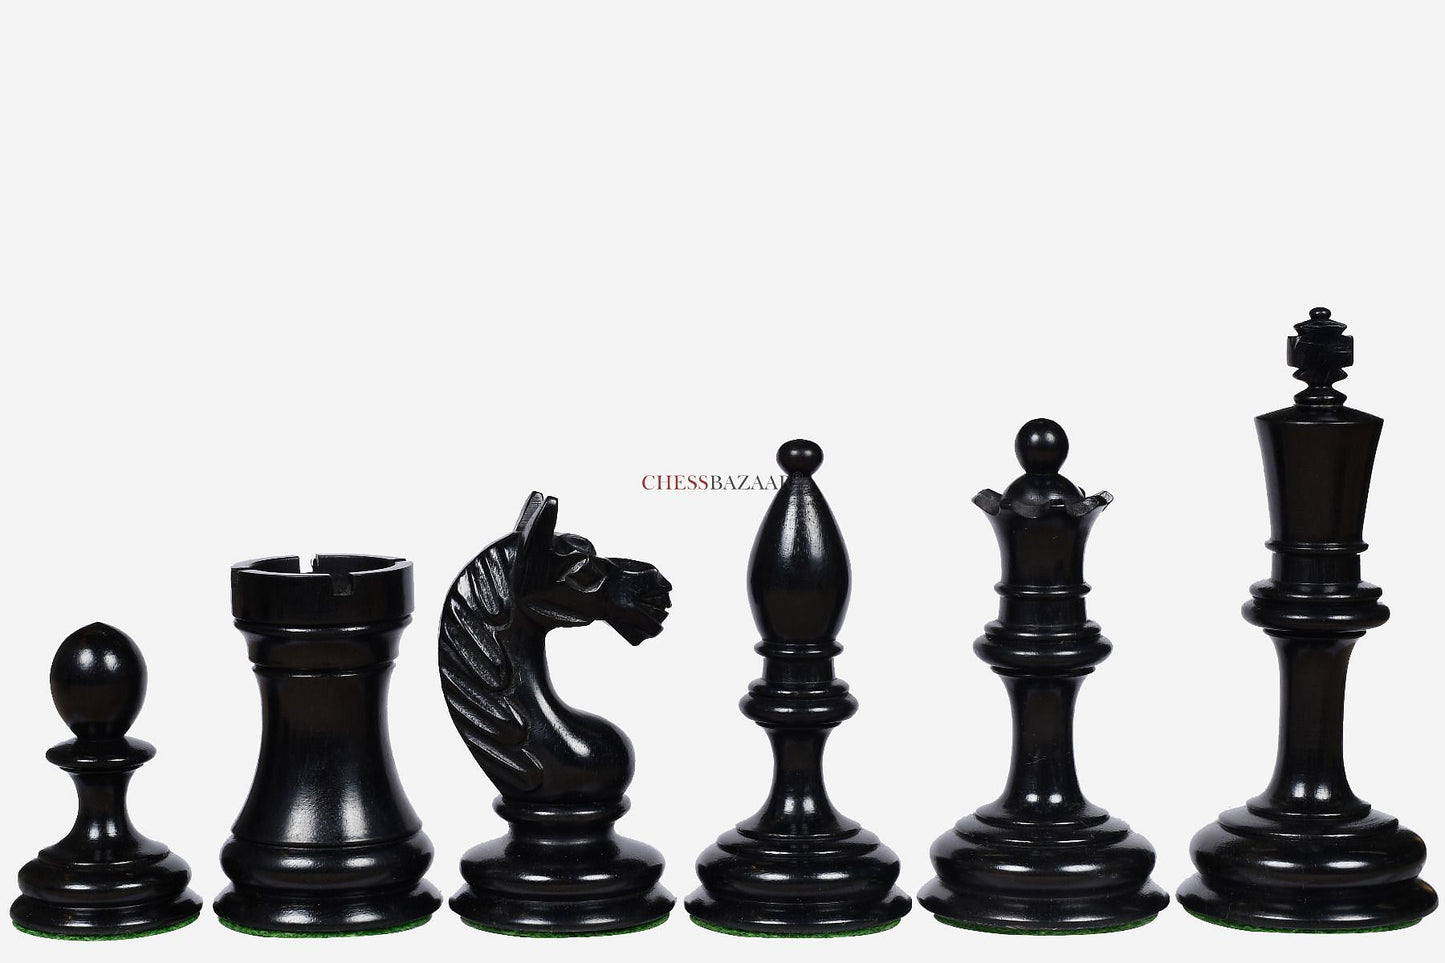 1935 Botvinnik Flohr Reproduced Soviet Chess Pieces in Ebony / Box Wood - 4" King